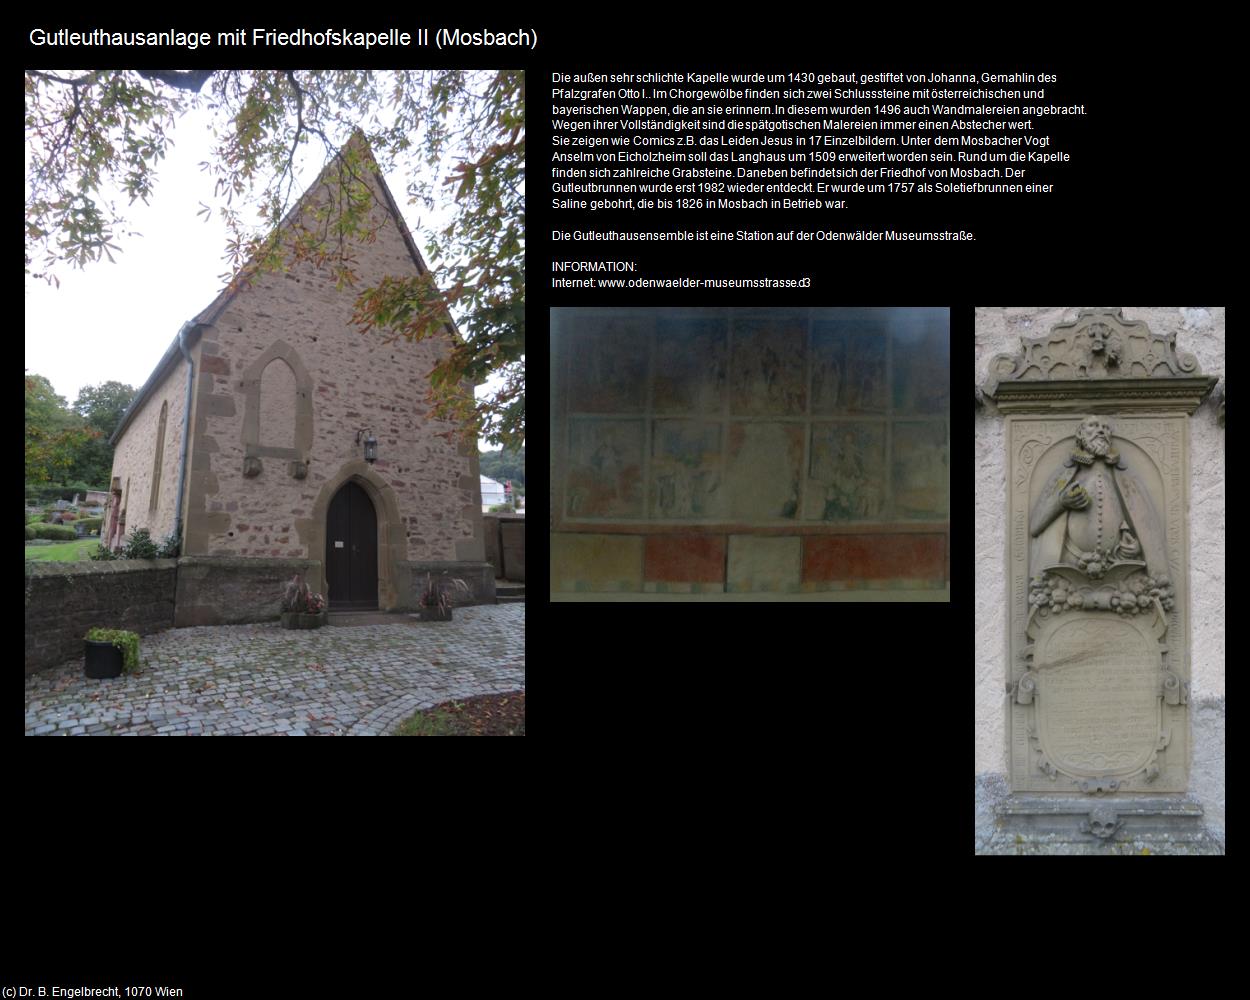 Gutleuthausanlage mit Friedhofskapelle II (Mosbach) in Kulturatlas-BADEN-WÜRTTEMBERG